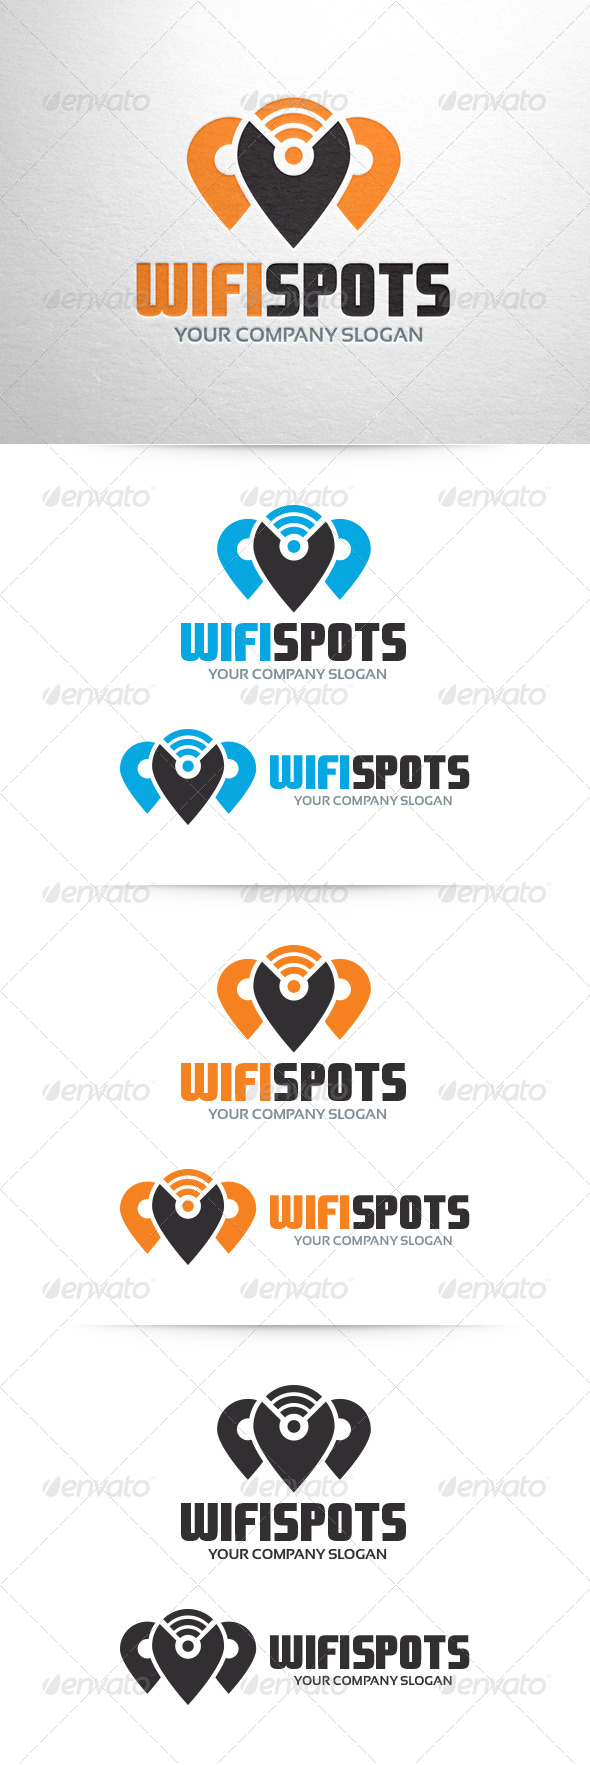 Wi-Fi Spots Logo Template